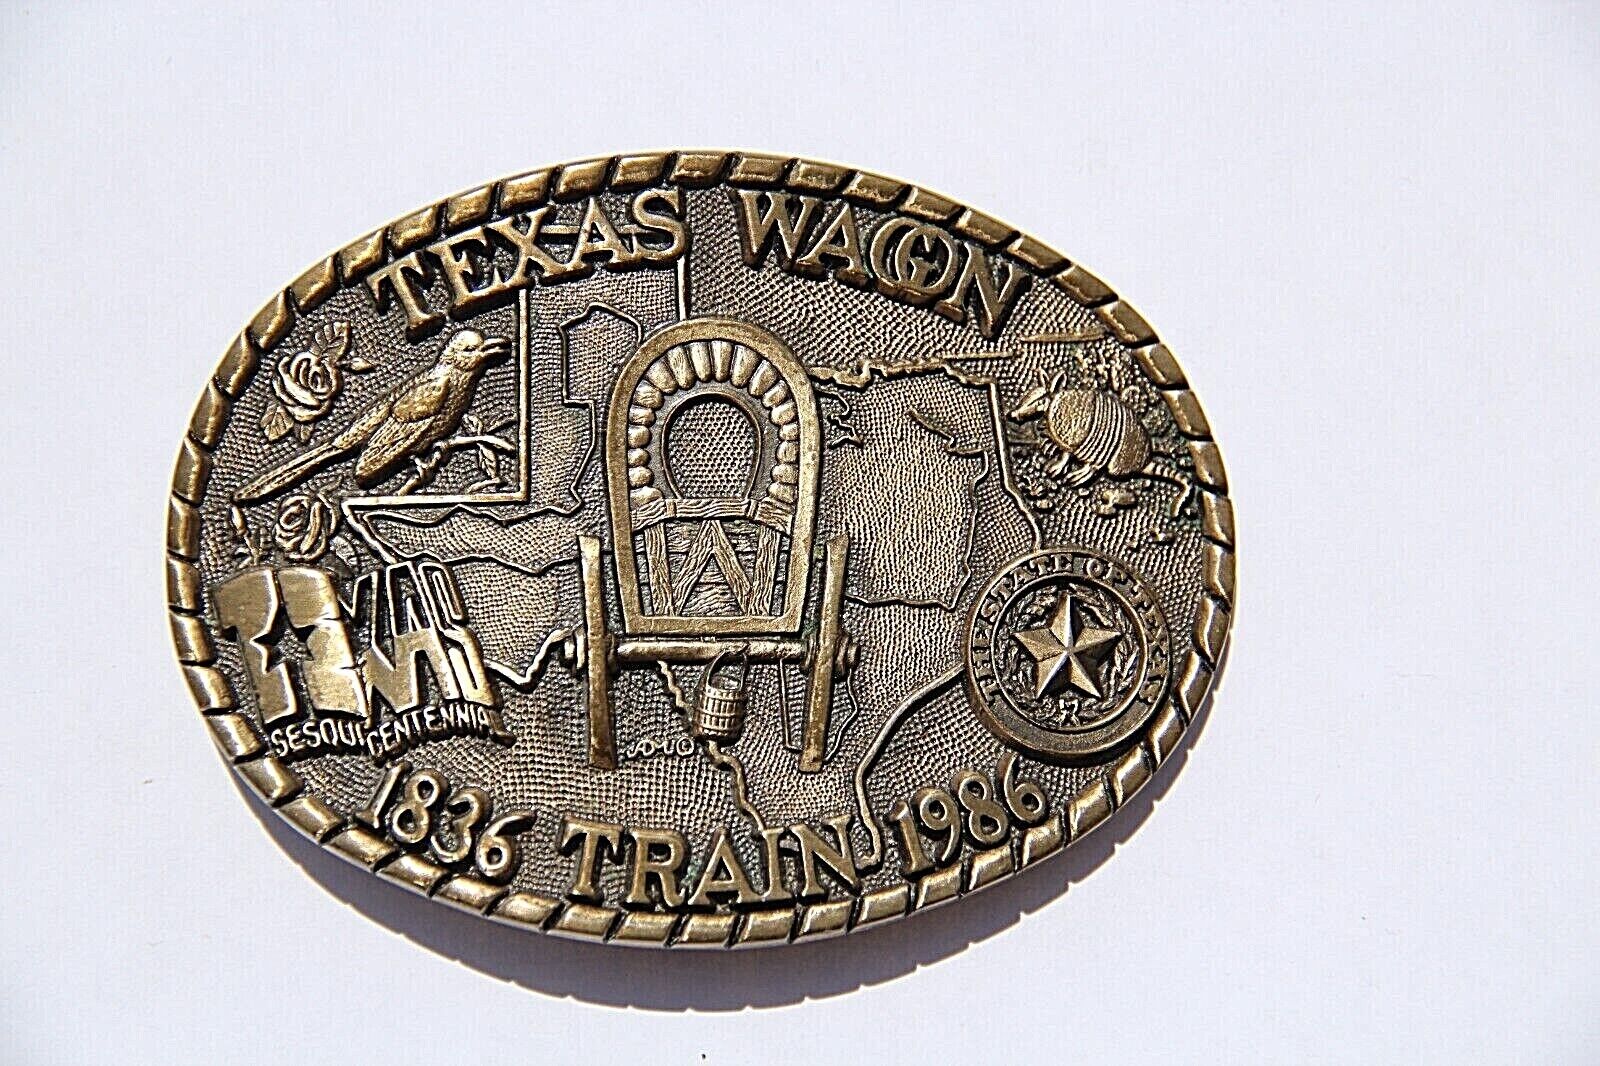 Texas 1836 - 1986 Wagon Train Belt Buckle